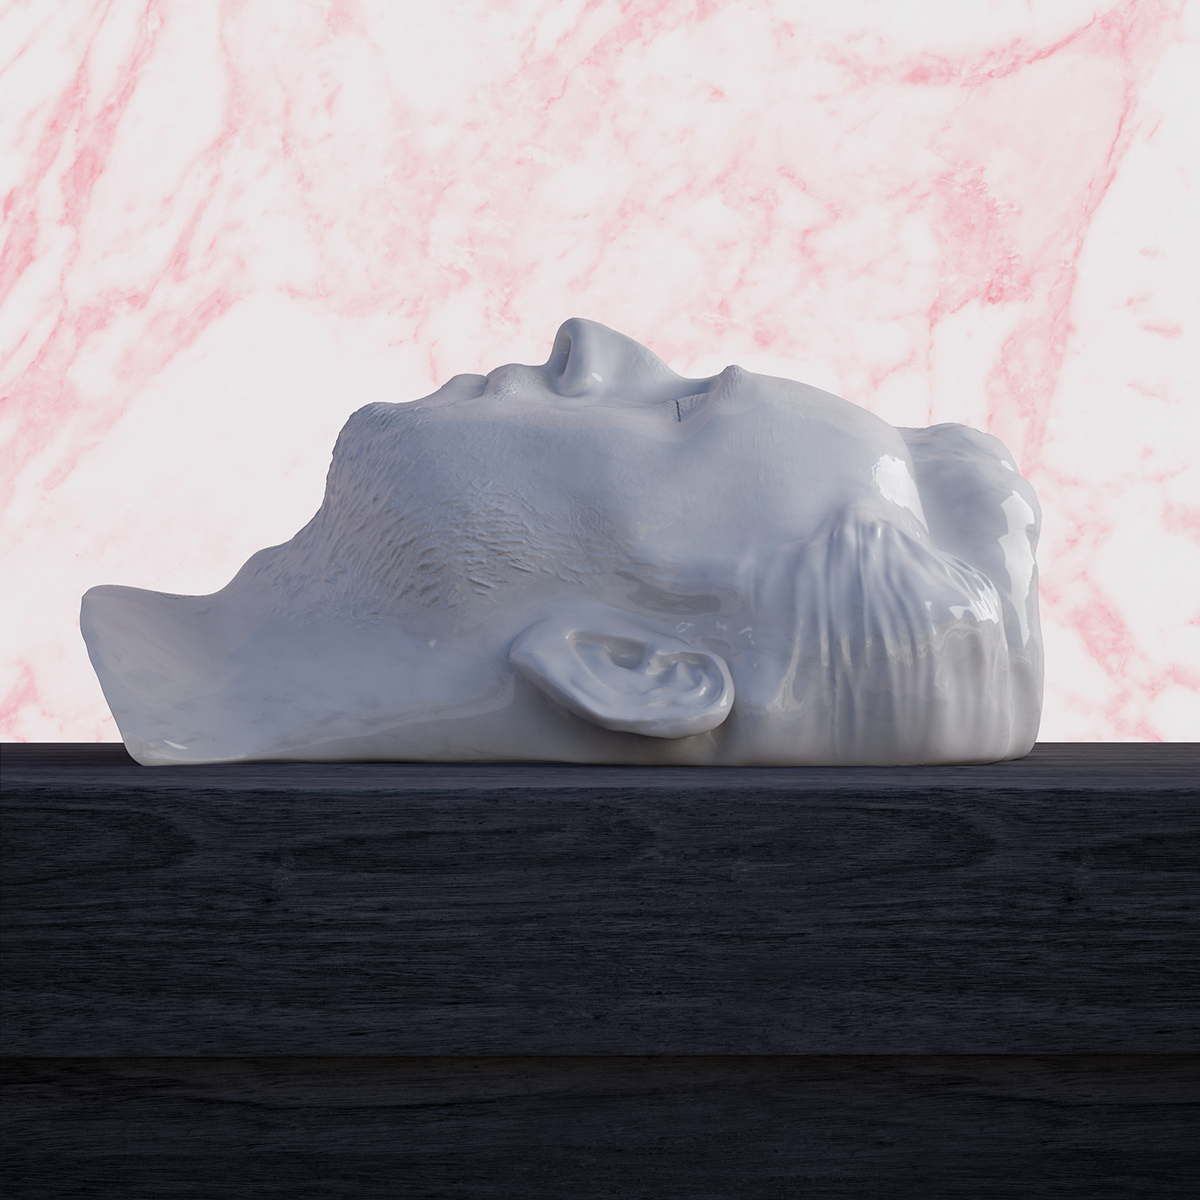 3D  sculpt  Tom Krell  mile eror  3d  modelling  Album cover